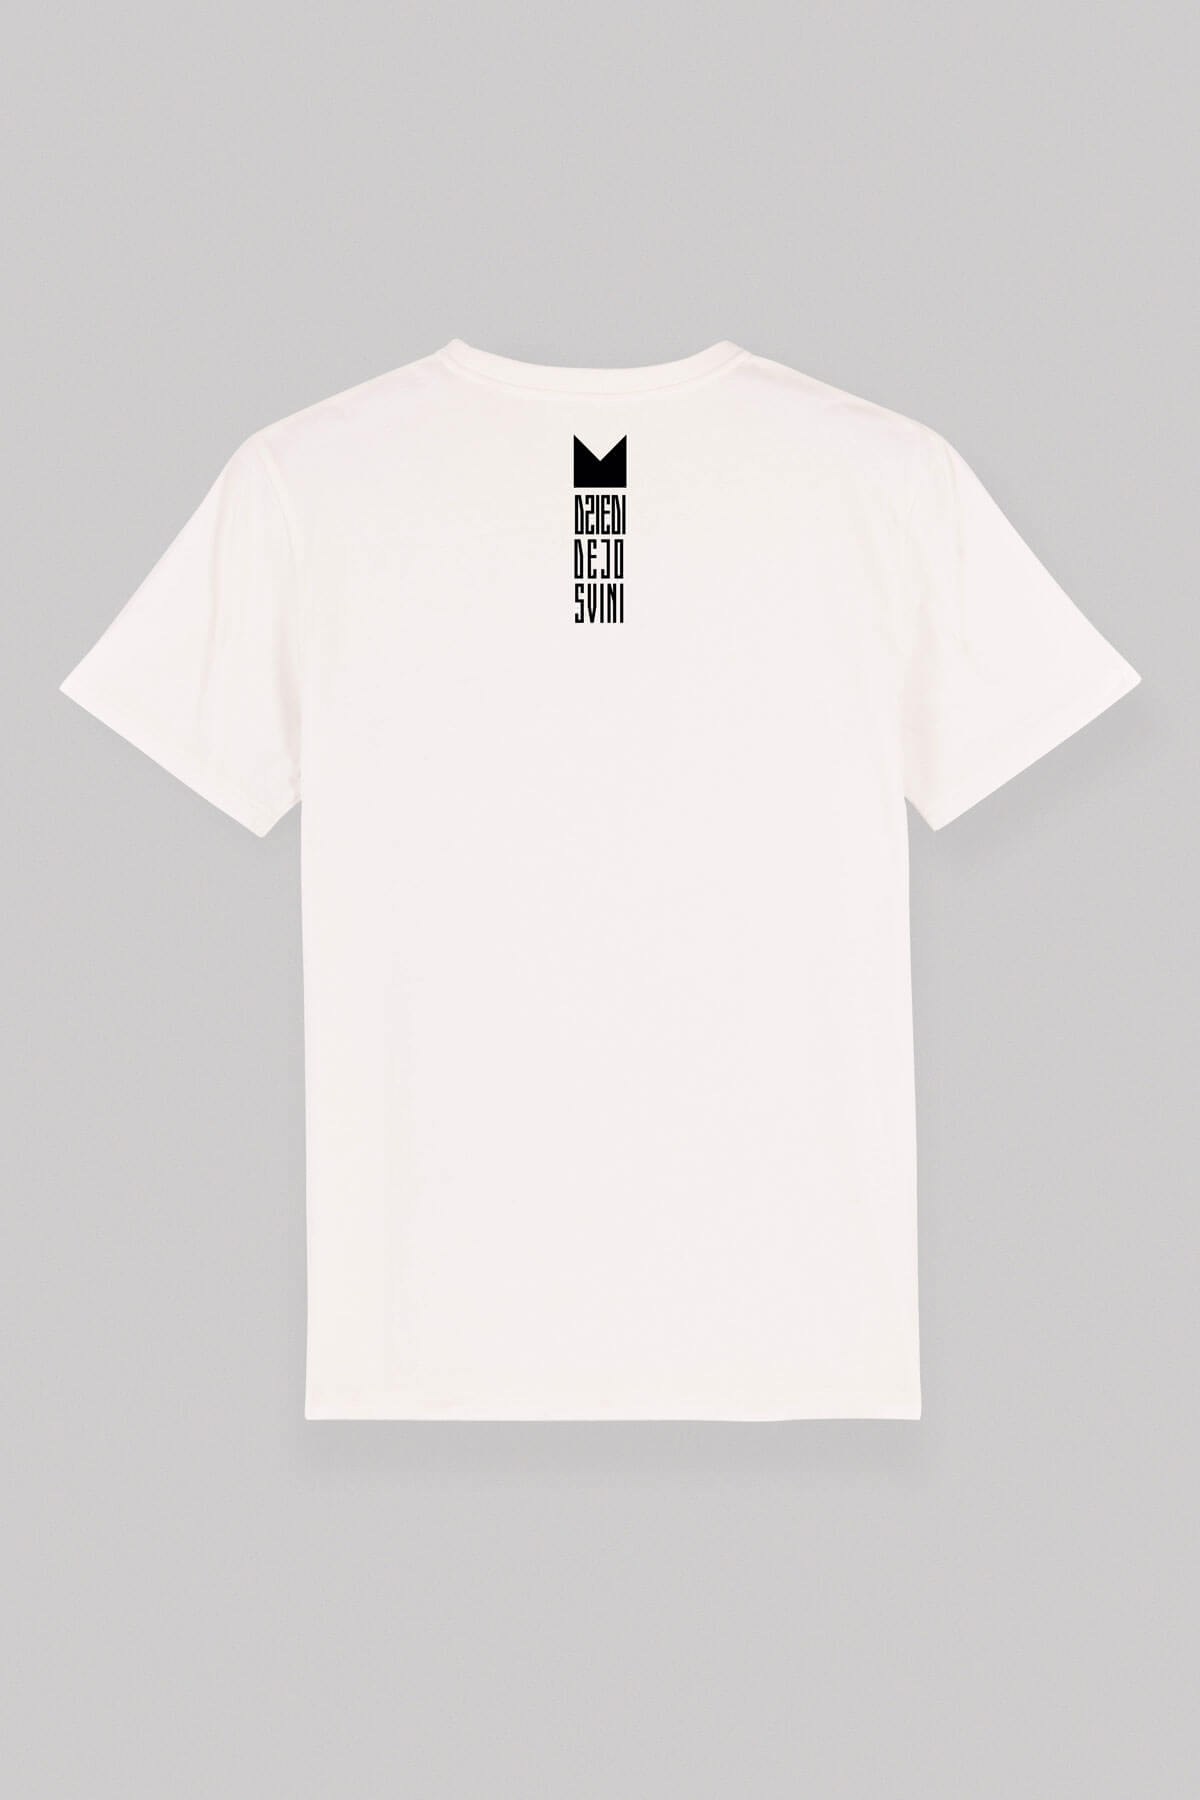 M50 Organic Cotton T-shirt | DZIEDI DEJO SVINI - SING DANCE and CELEBRATE